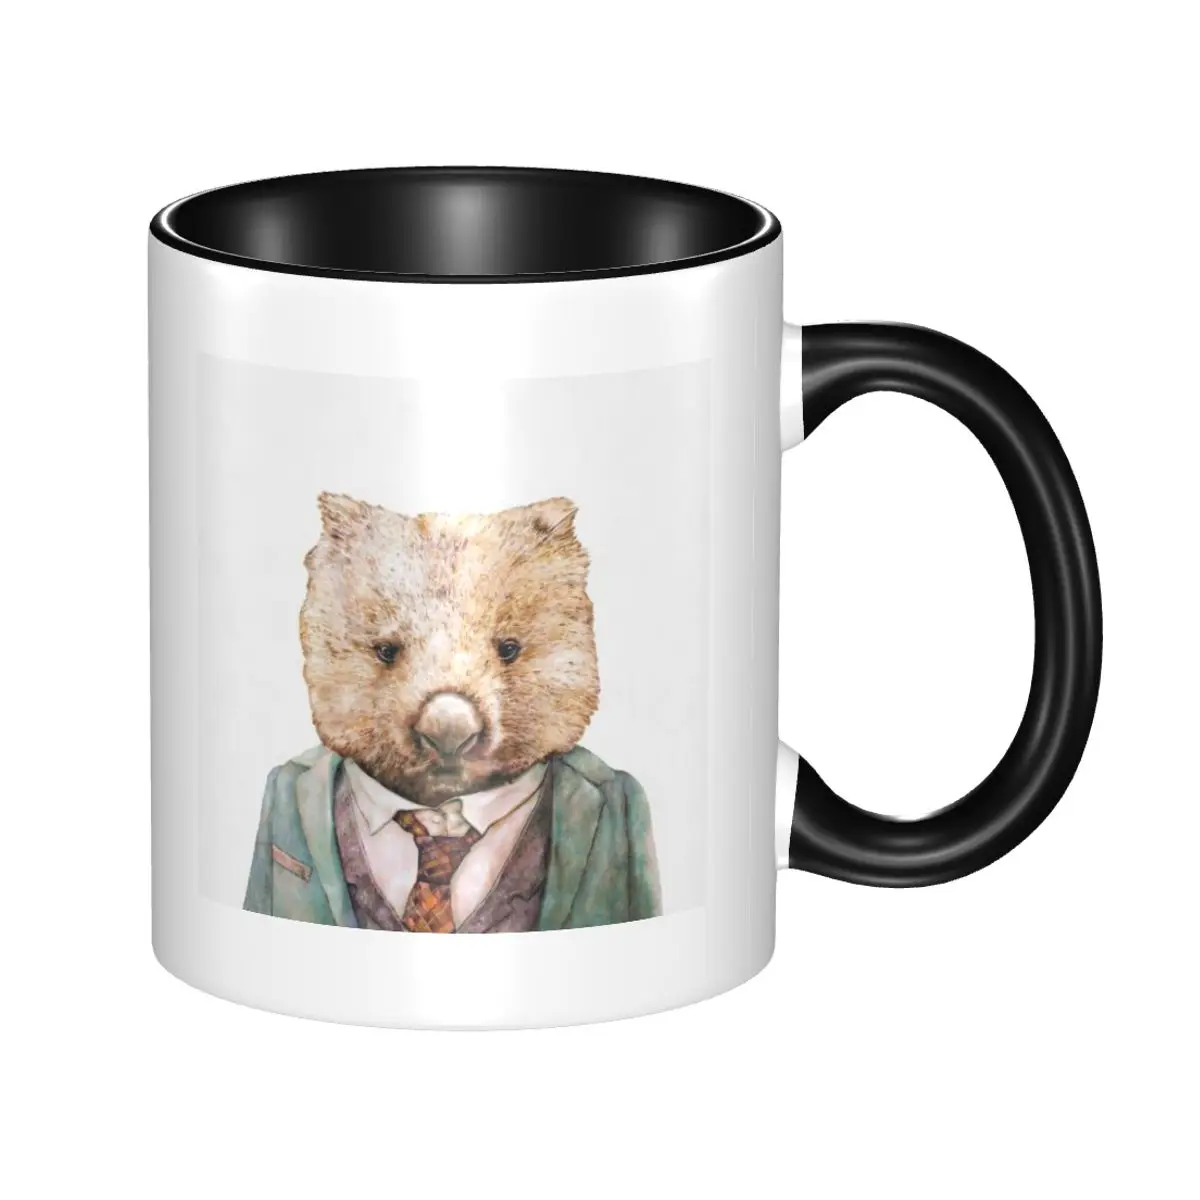 Wombat 3 Drinking Gift Ceramics Mug Cup